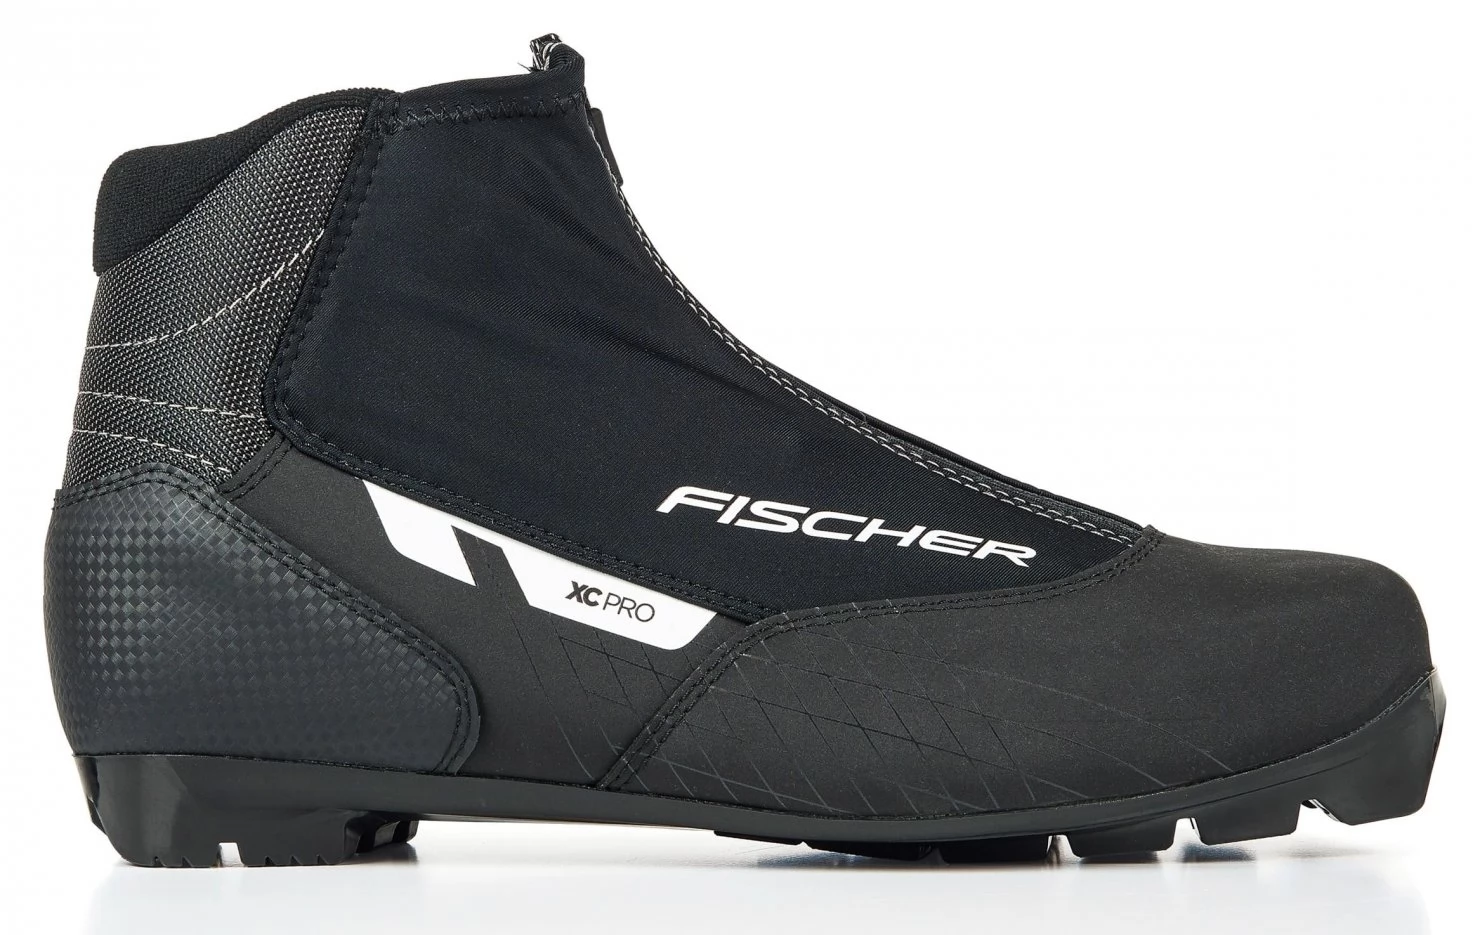 Běžecké boty Fischer XC Pro Black/white